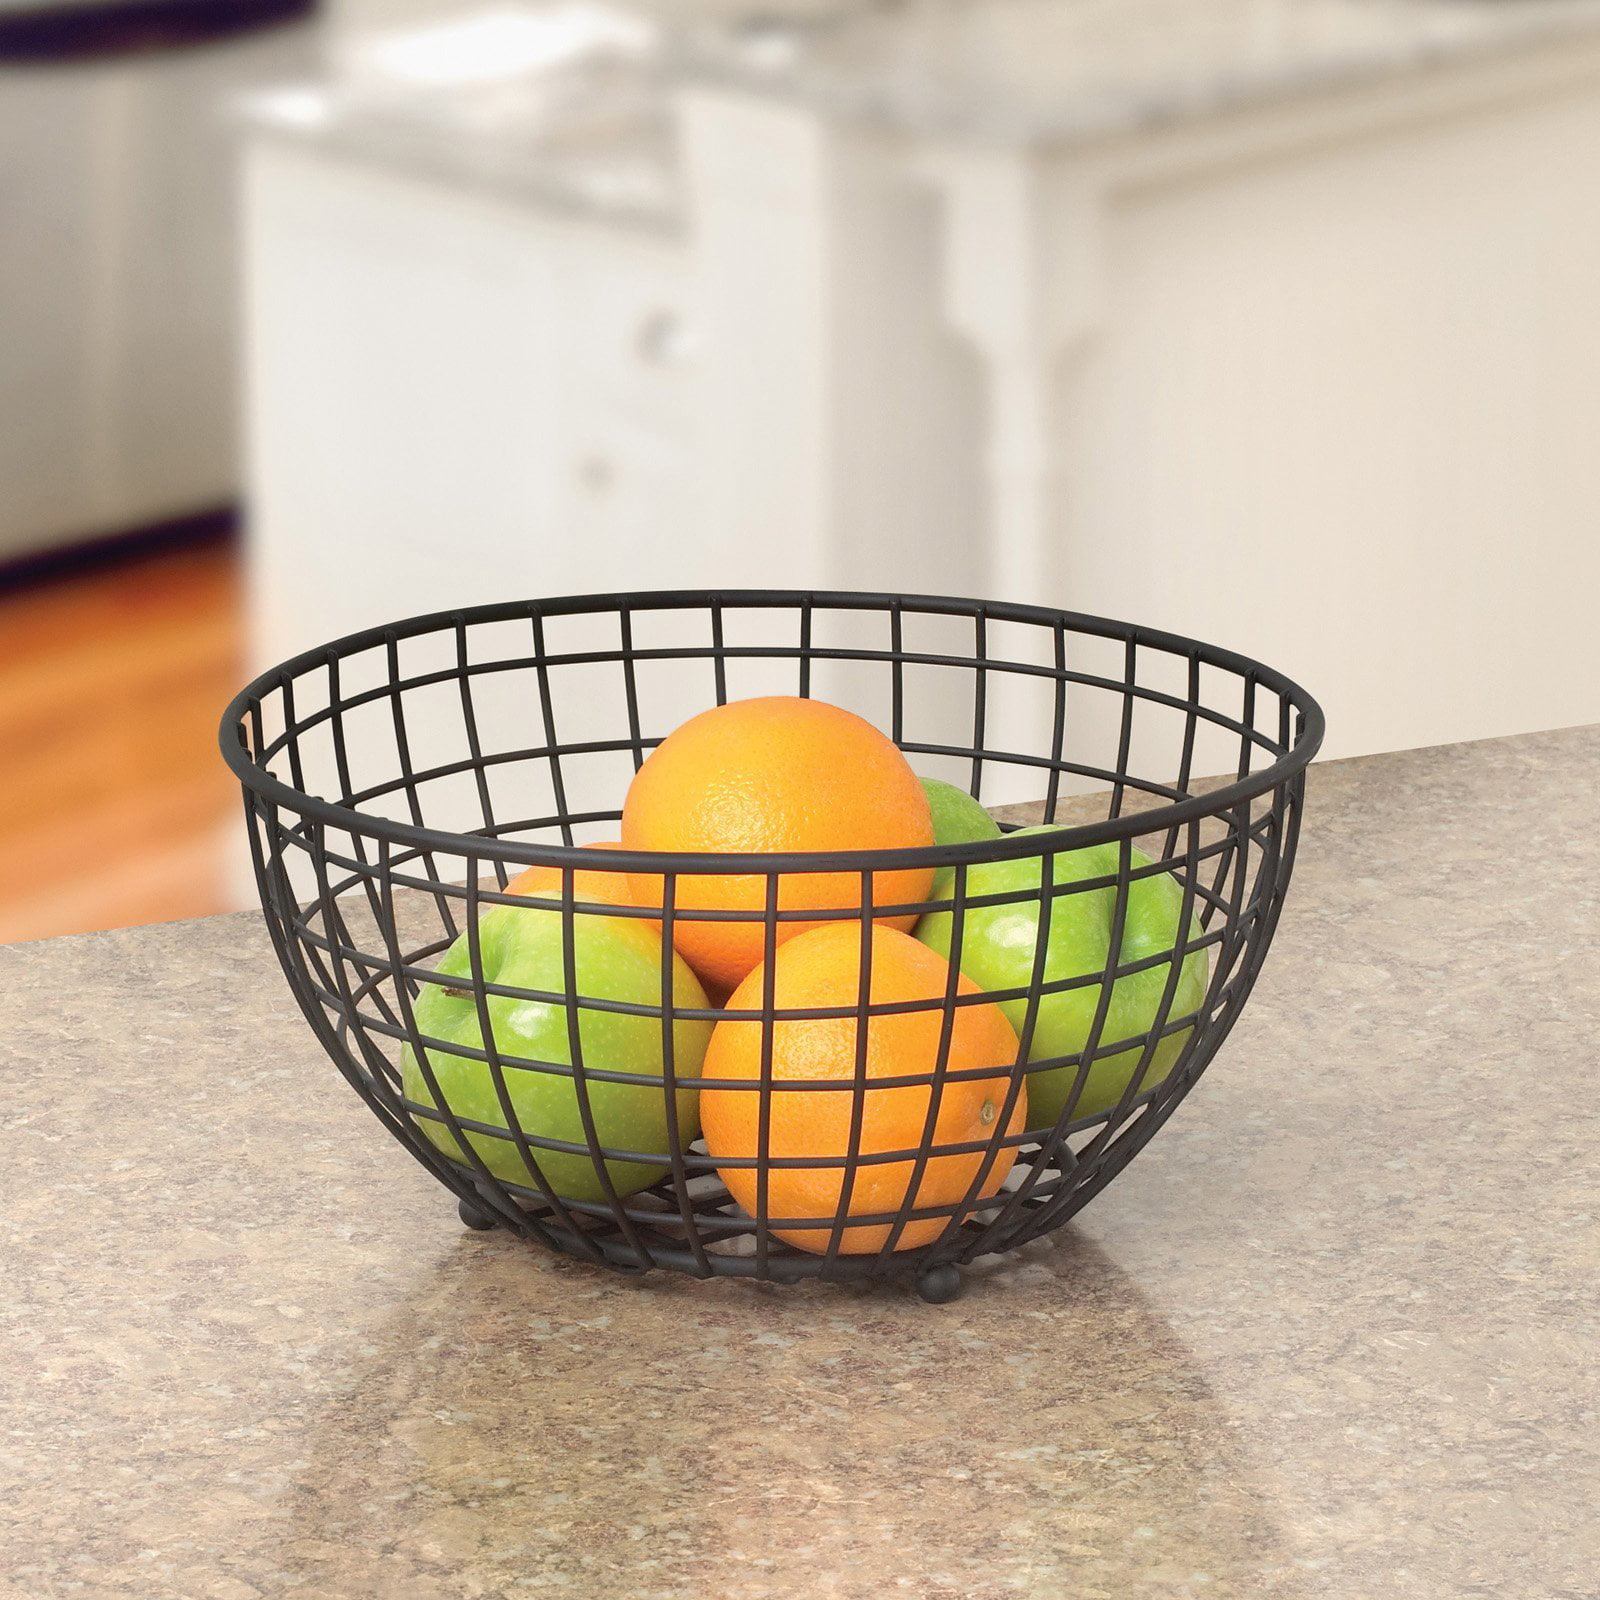 Spectrum Diversified Designs Grid Fruit Bowl - Walmart.com - Walmart.com